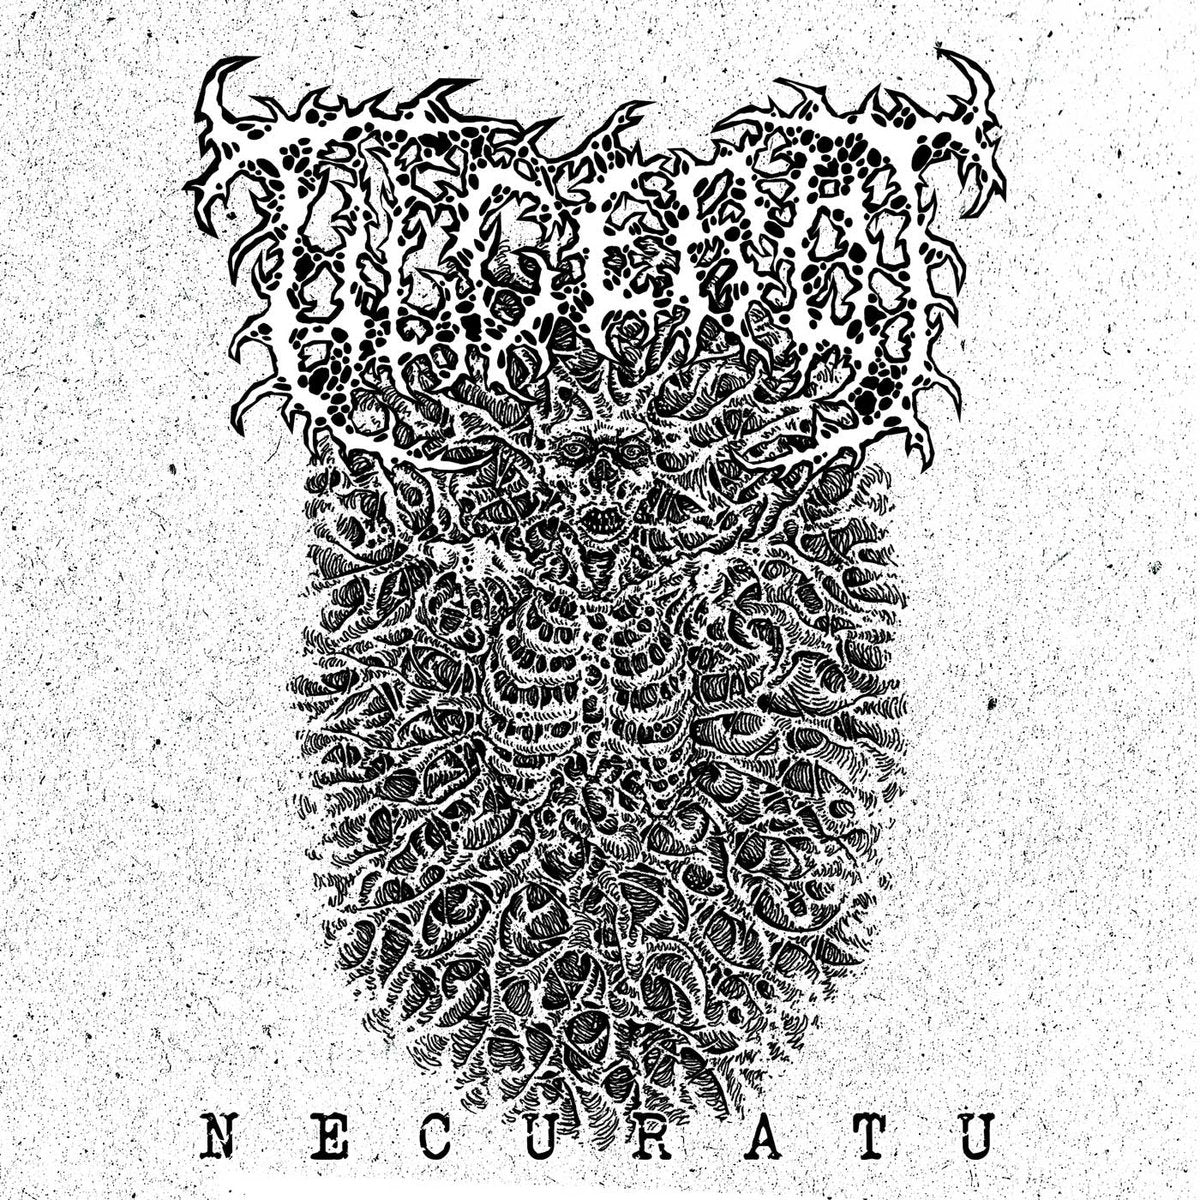 Ulcerot - Necutaru 7''